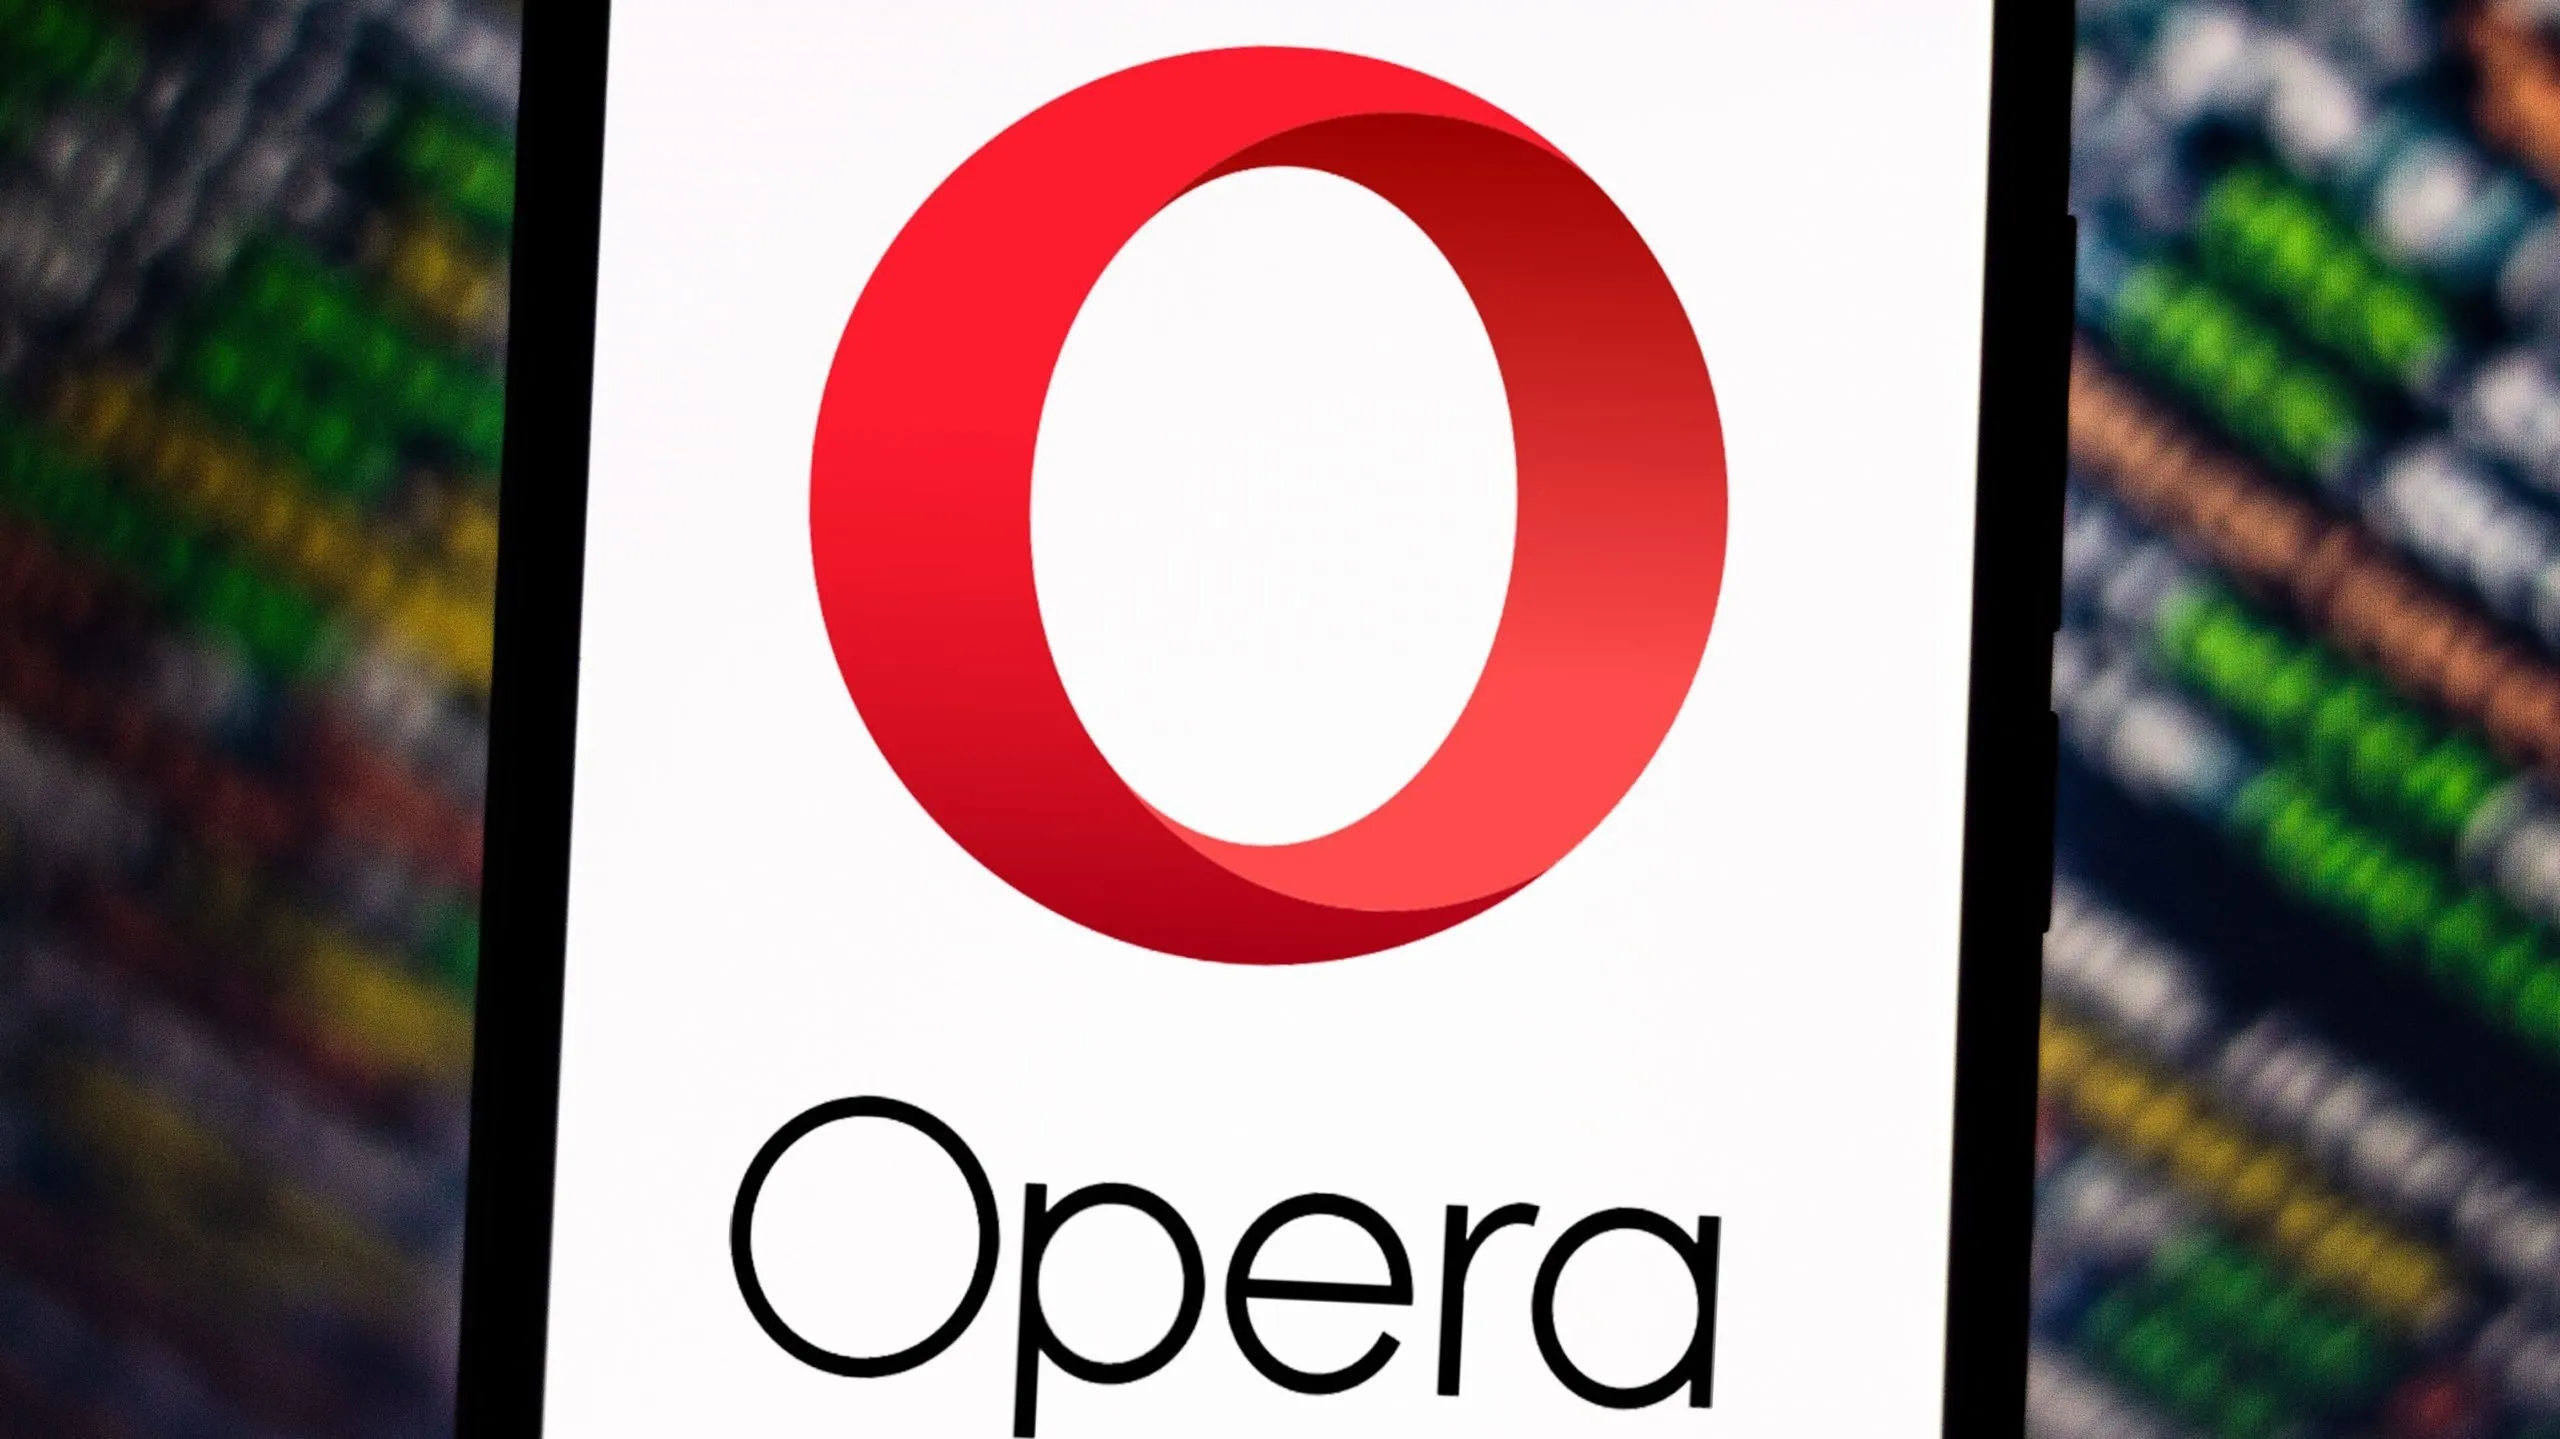 The Opera alternative web browser. Image: Shutterstock